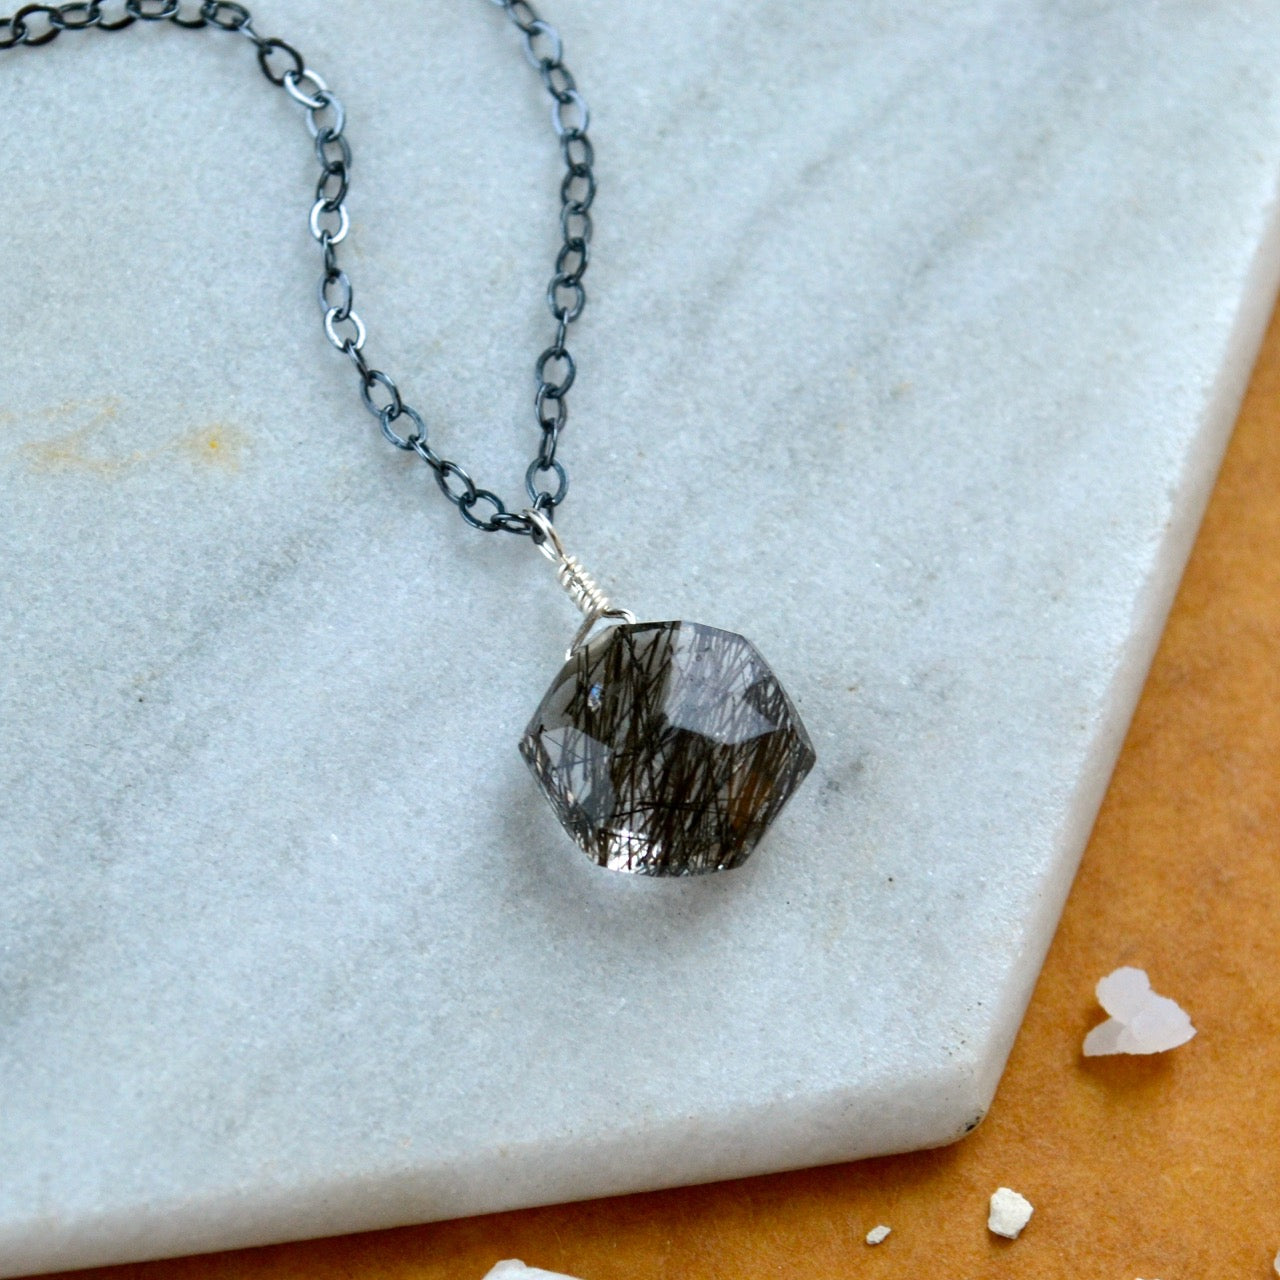 wayfinder necklace handmade gemstone necklace black stone simple gem necklace oxidized silver sustainable jewelry